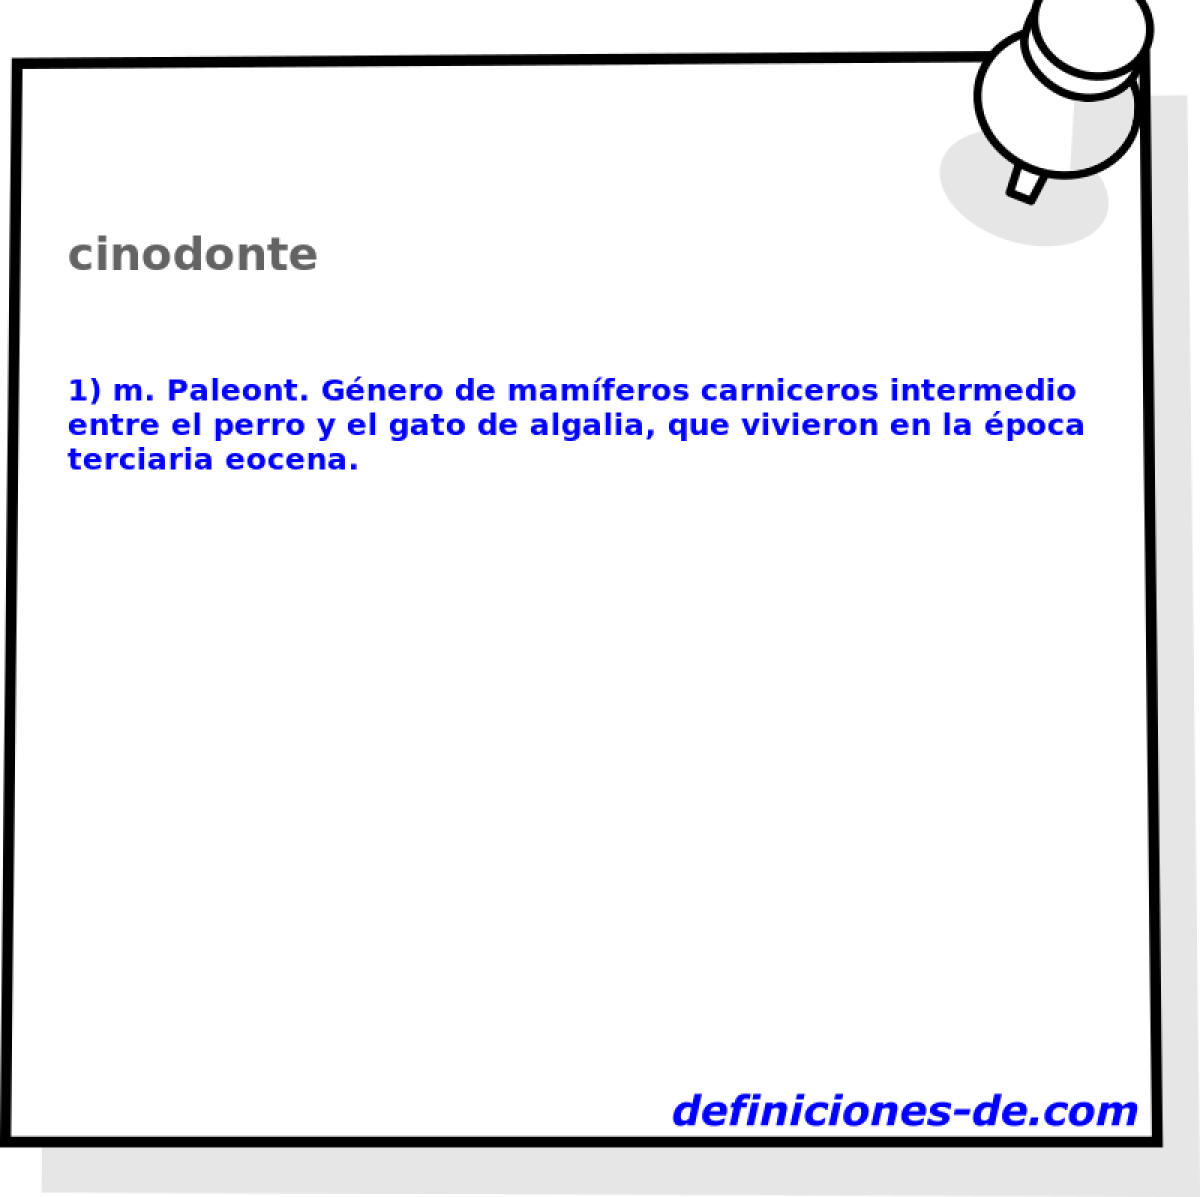 cinodonte 